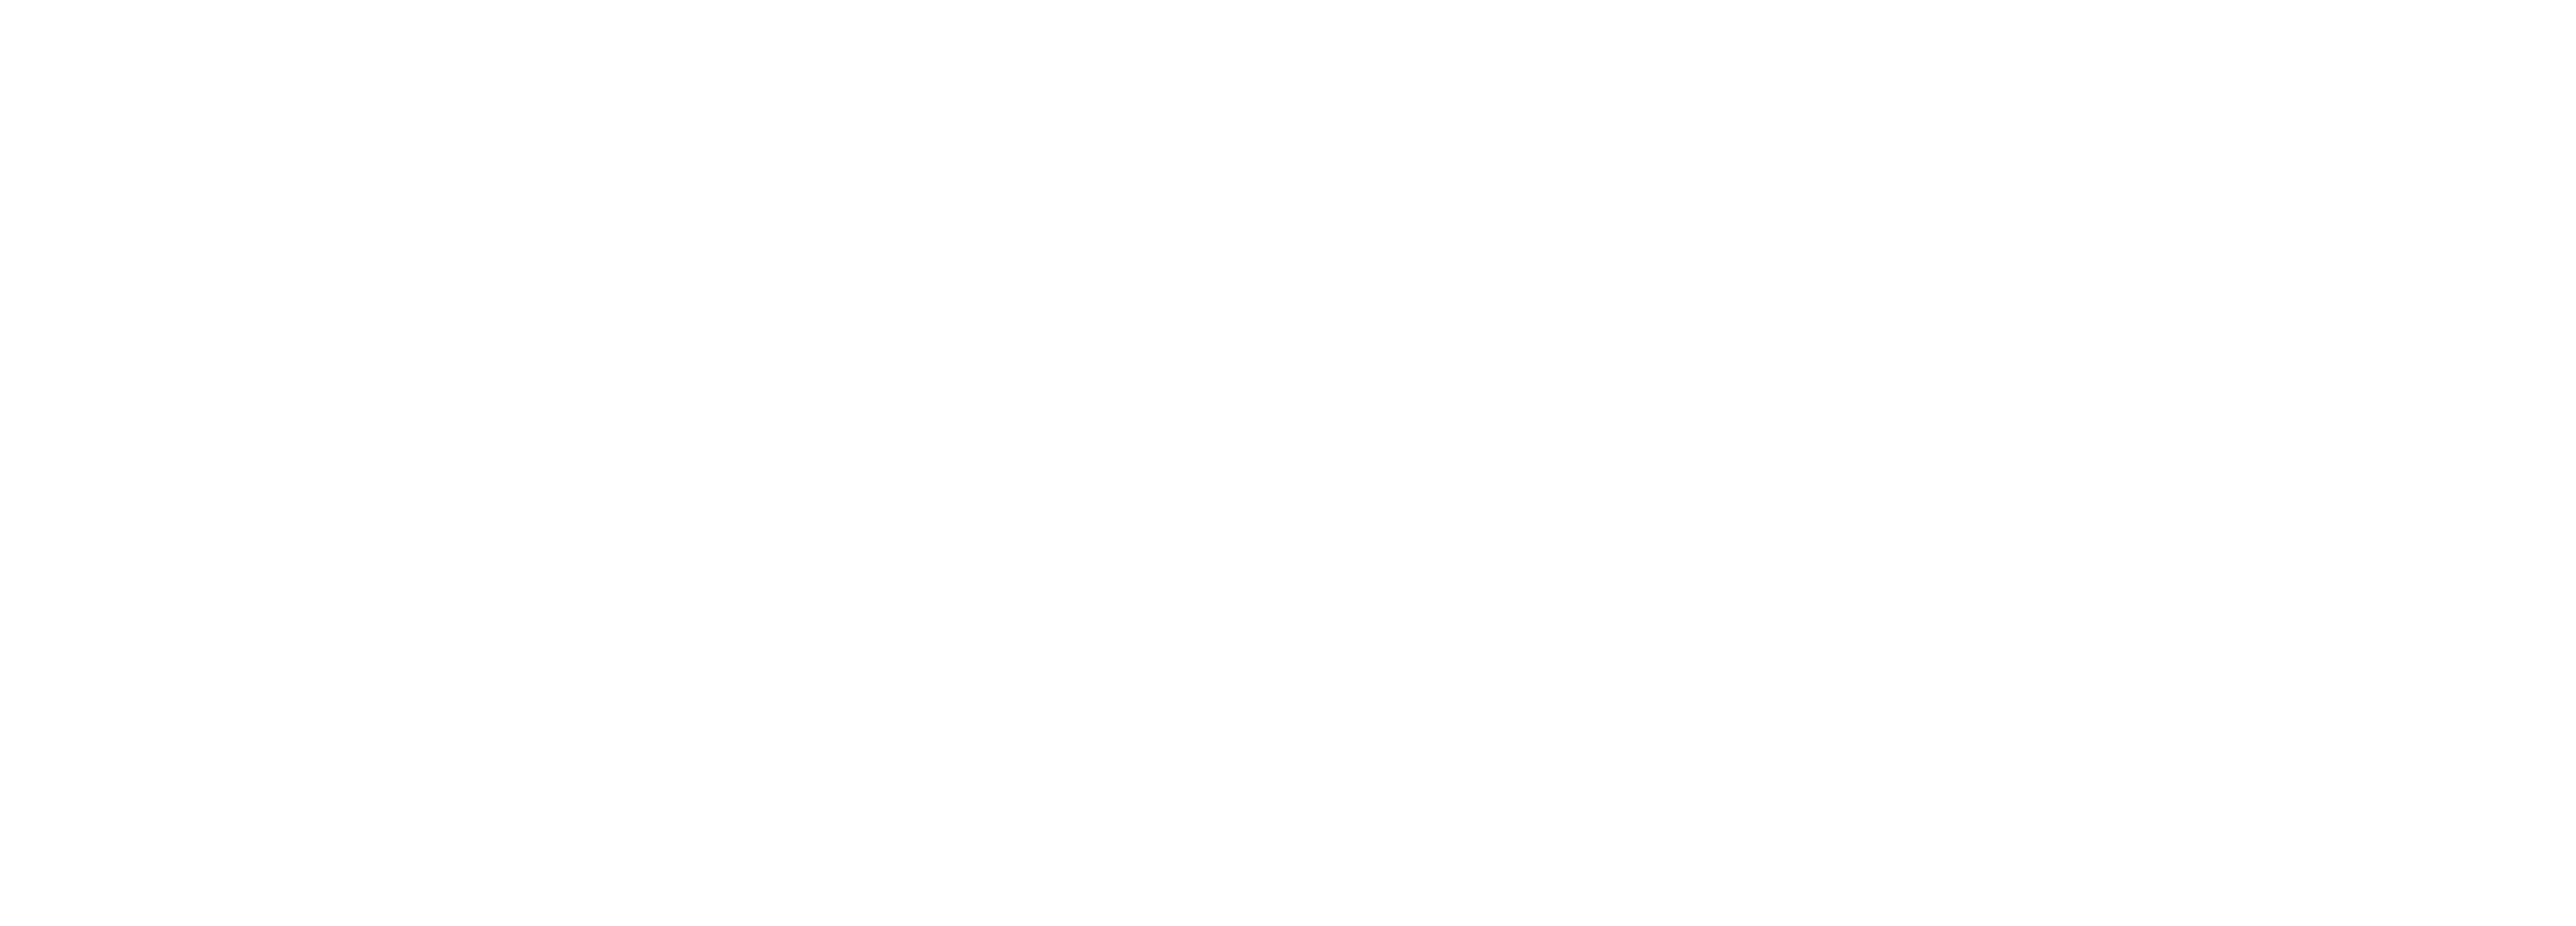 Counselling Alberta logo